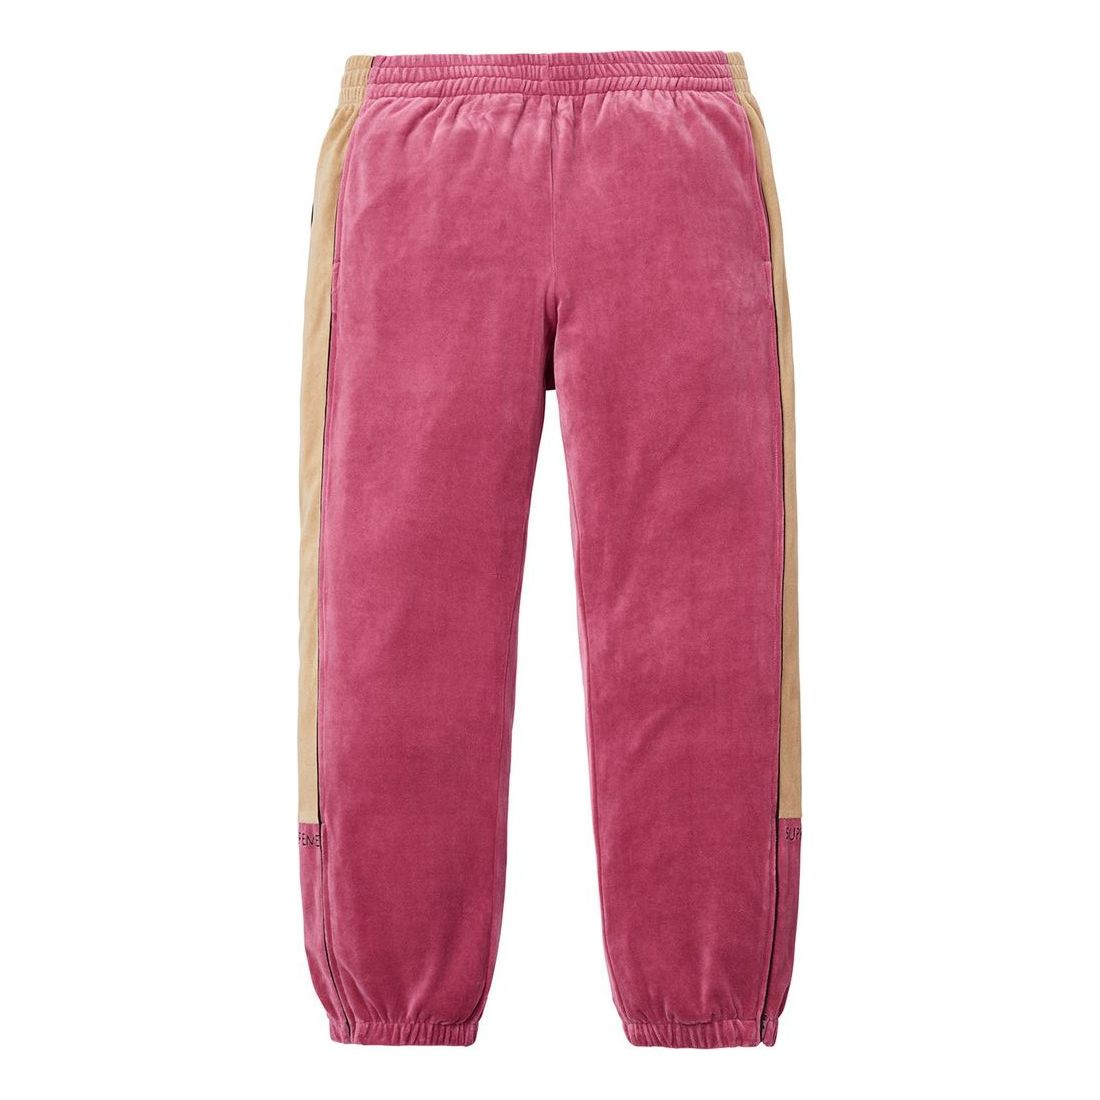 Supreme FW18 Velour Track Pant Pink Velvet Long Pants Casual Pants 